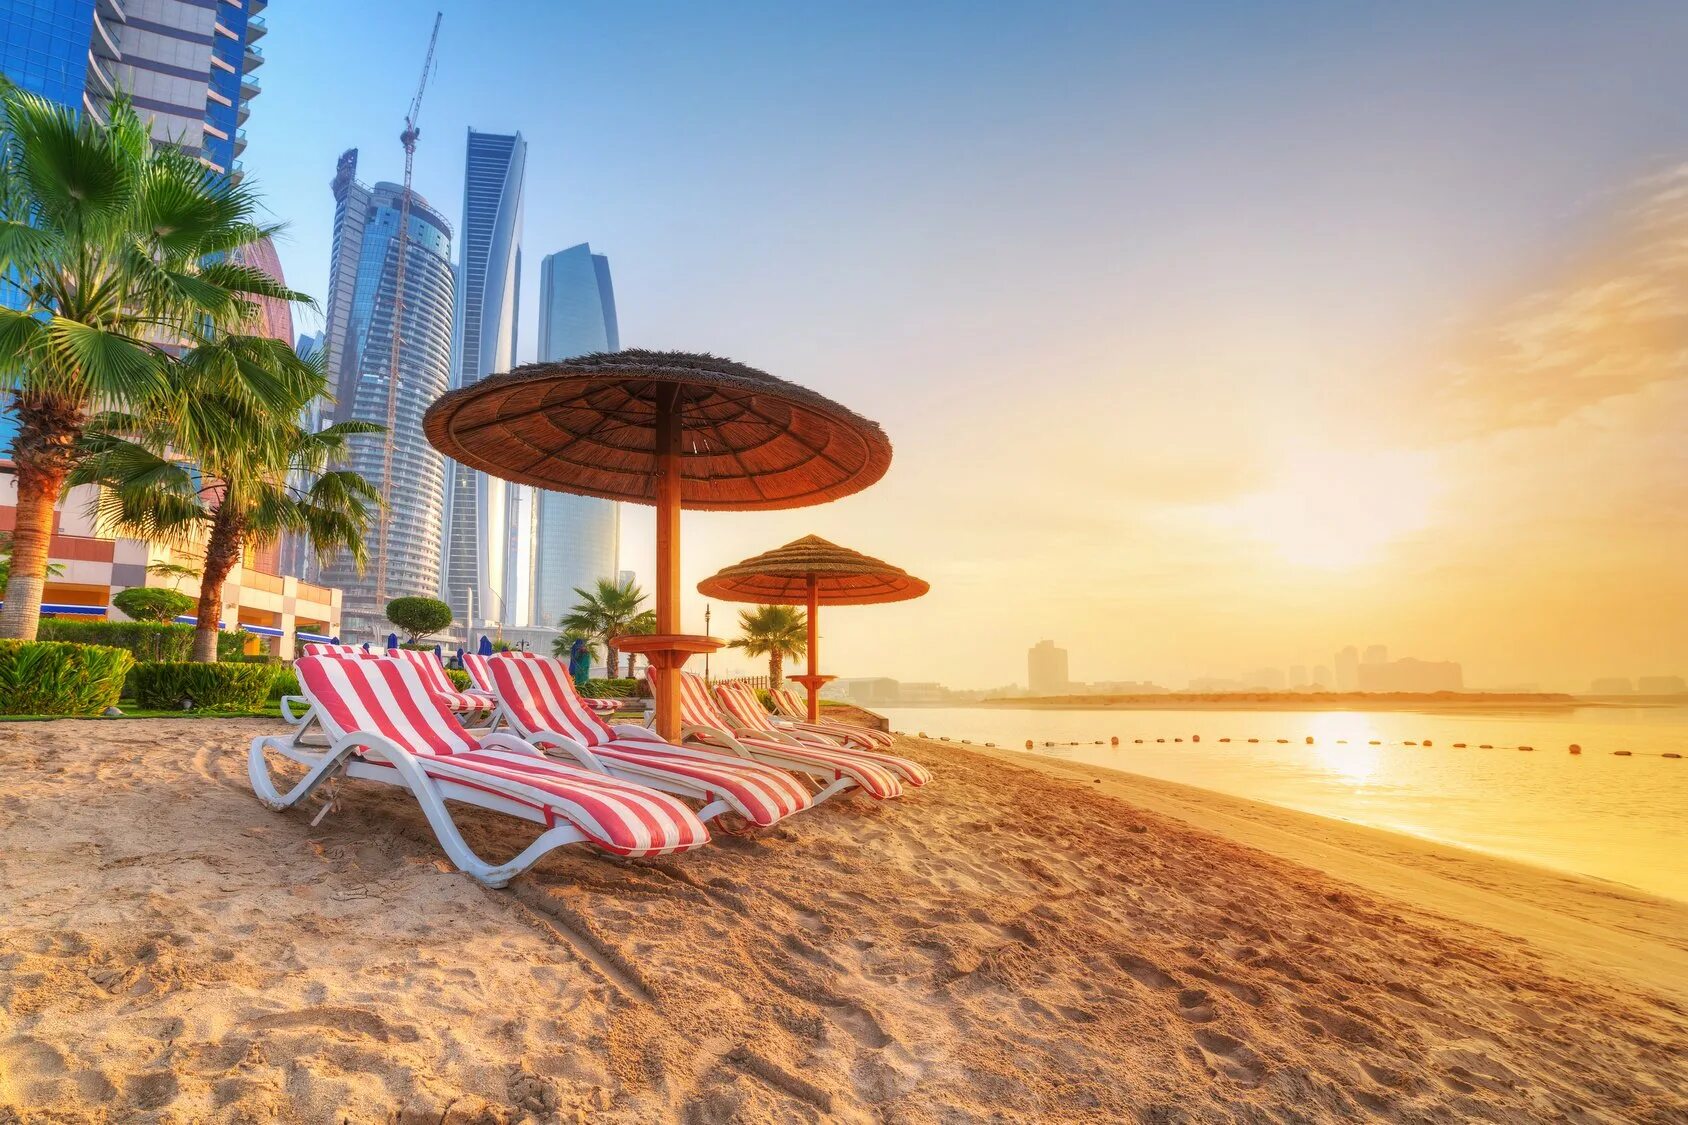 Пляж Сансет Дубай. Абу Даби пляжи. ОАЭ Абу Даби пляжи. Арабские эмираты Шарджа пляжи.